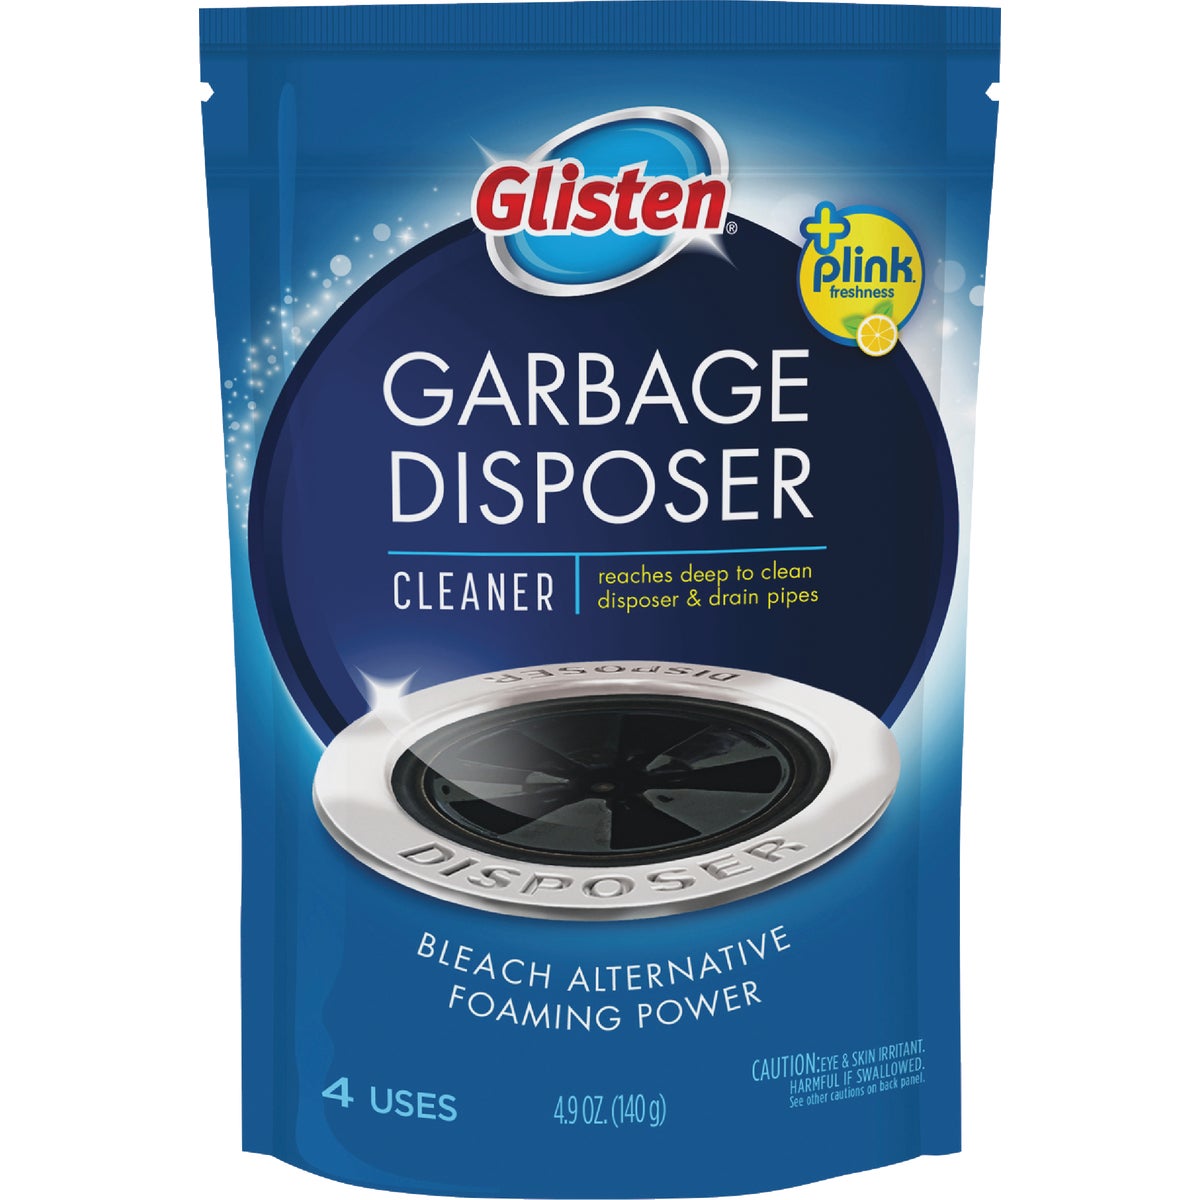 Glisten Disposer Care Garbage Disposer Cleaner (4-Count)